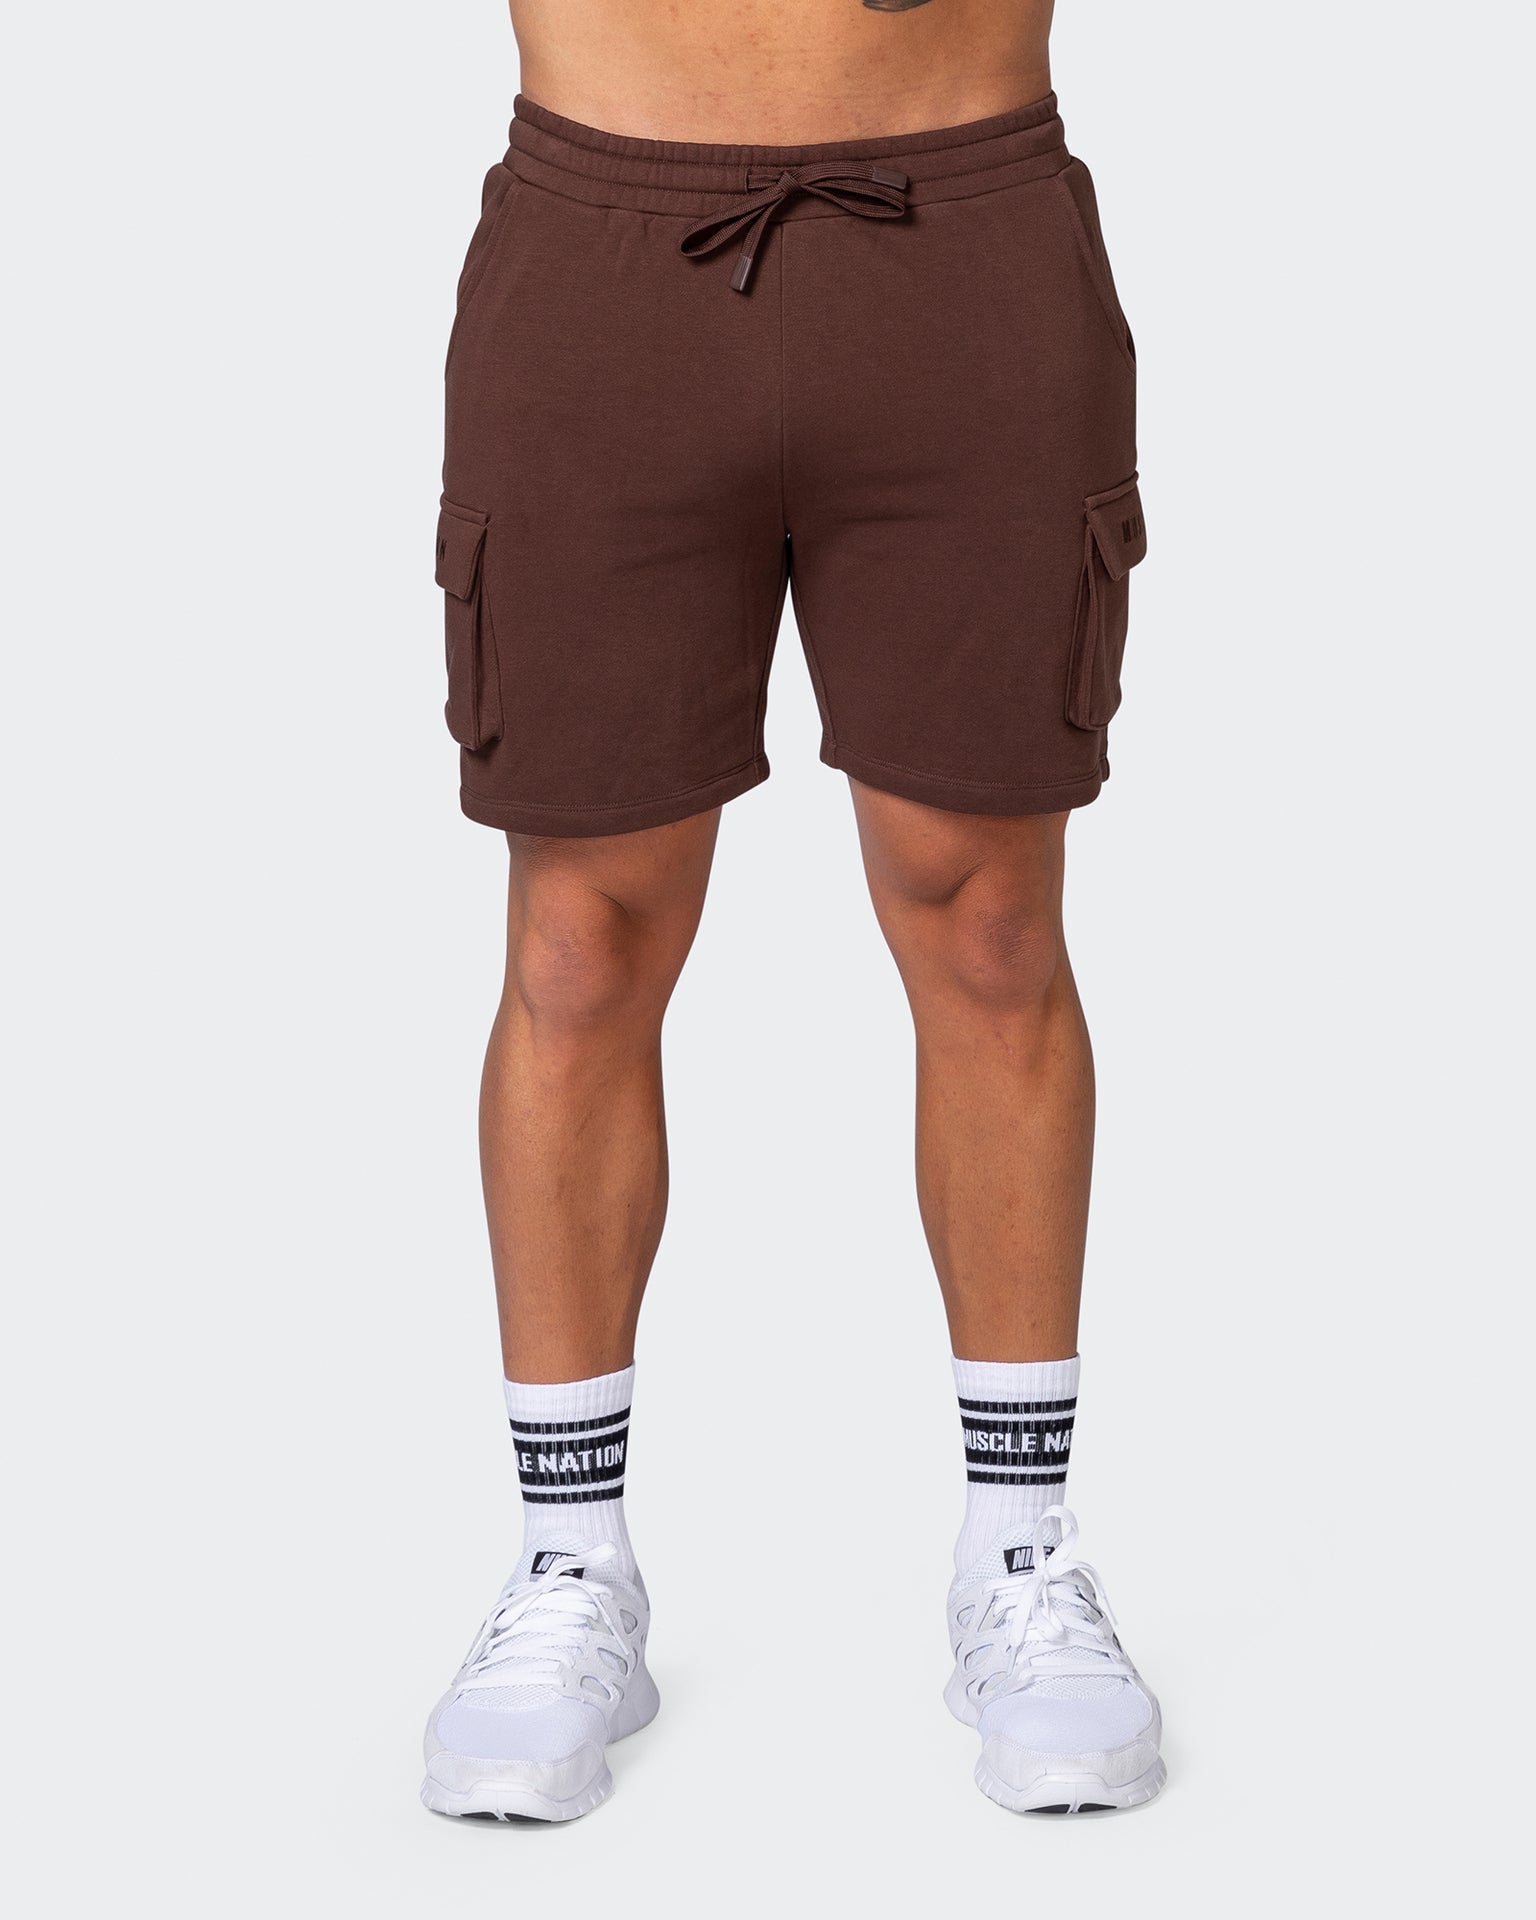 musclenation Activewear Cargo Shorts - Coffee